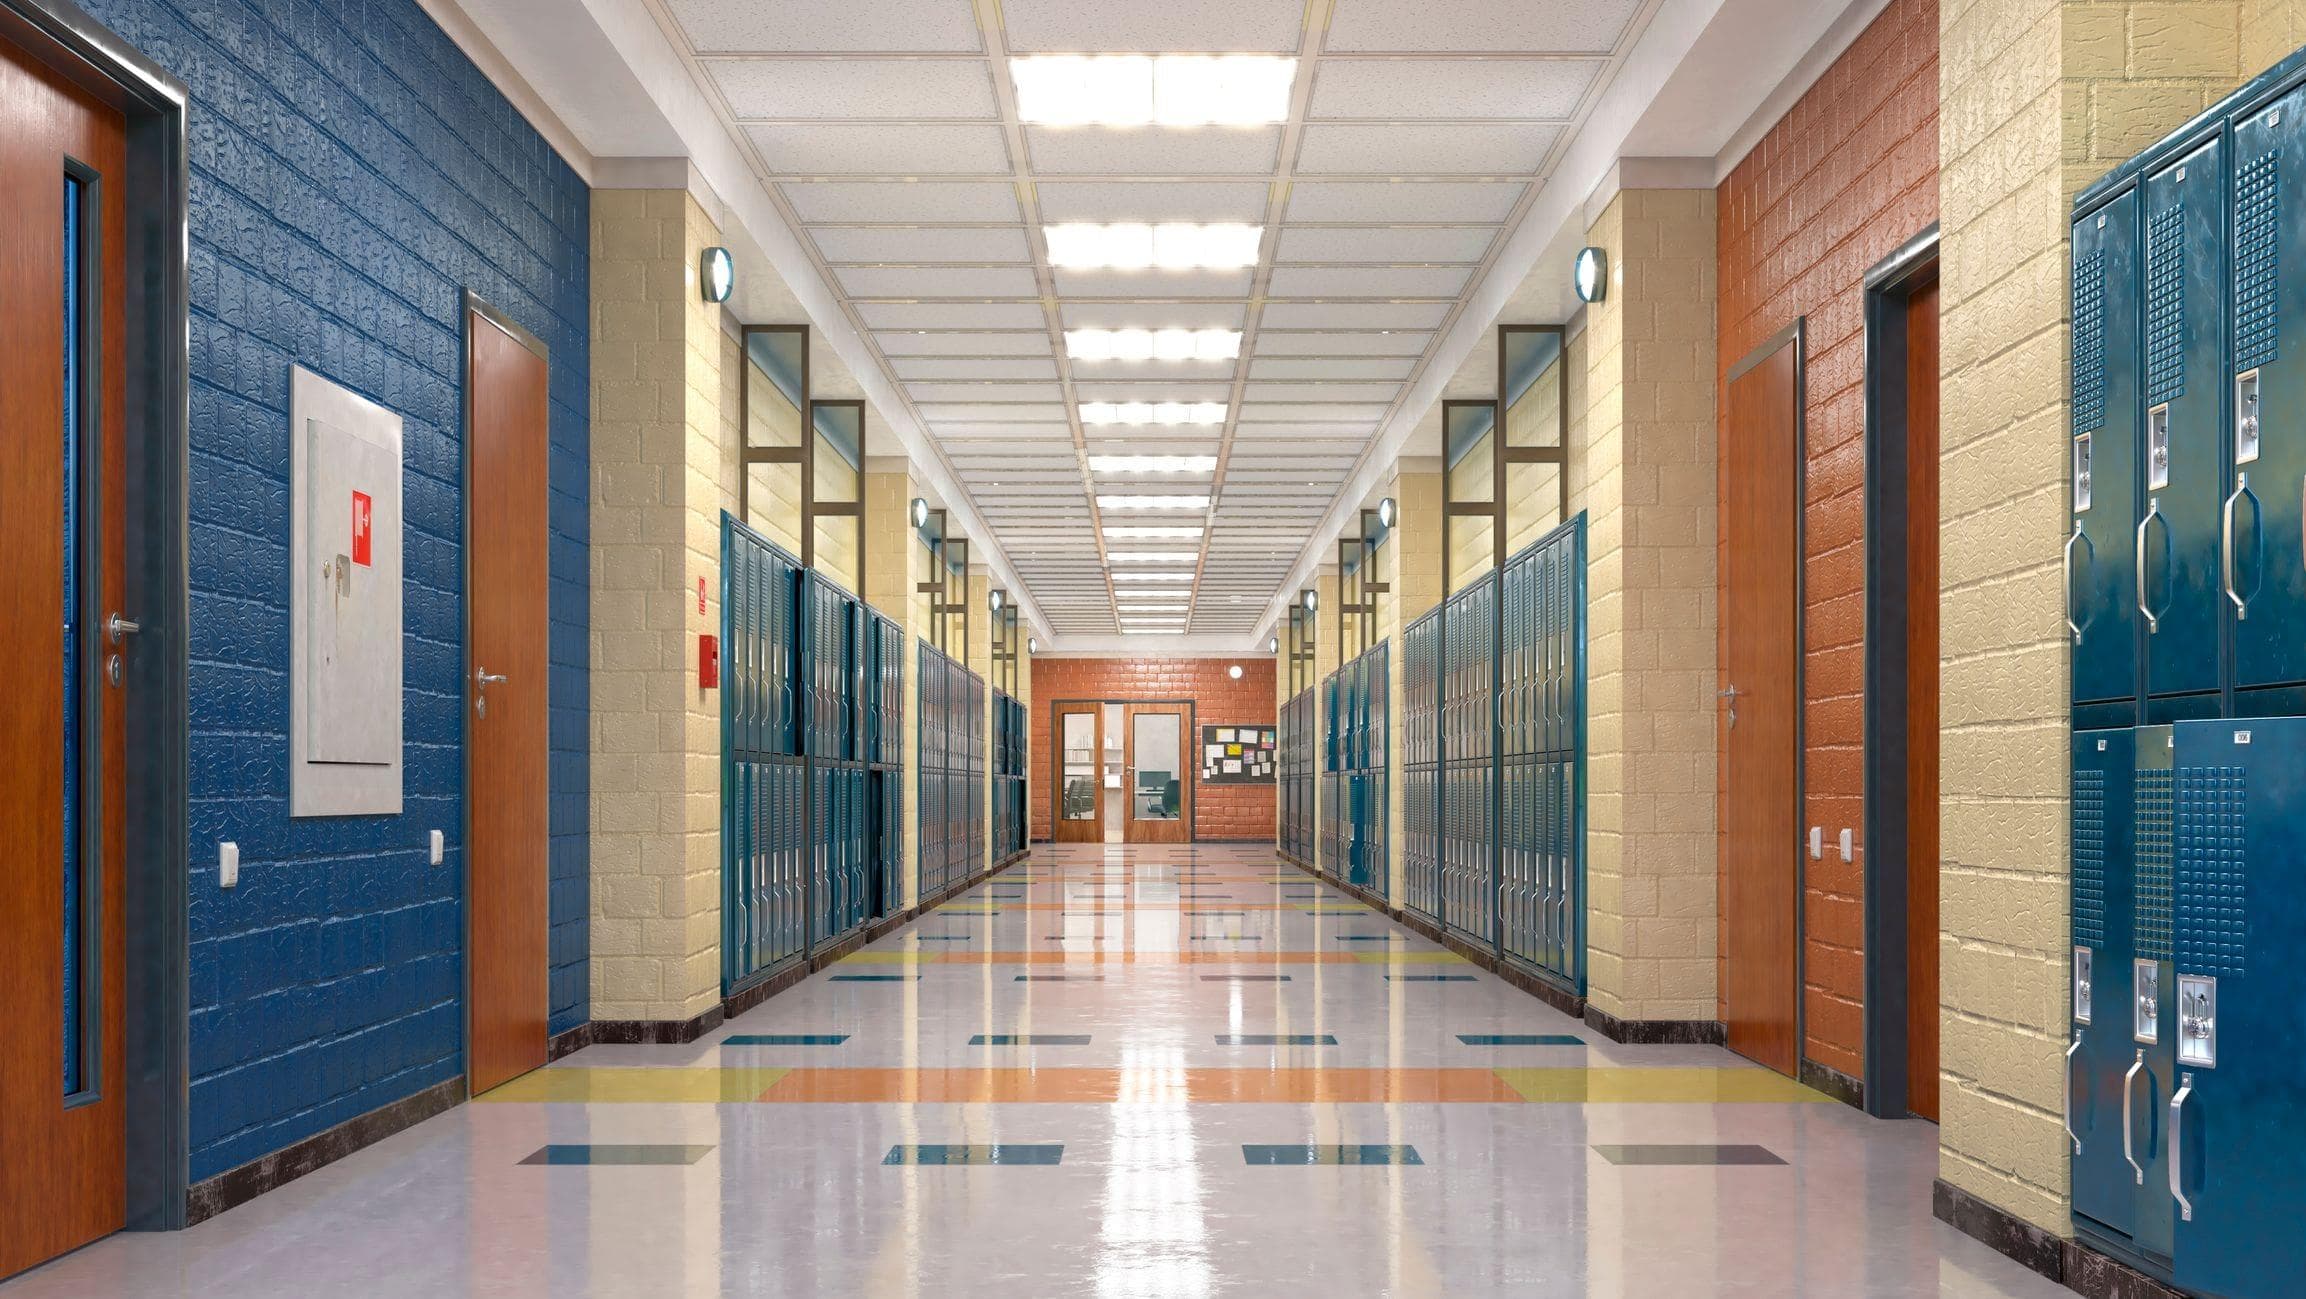 school interior hallway corridor for two way traffic with doors and stairwells